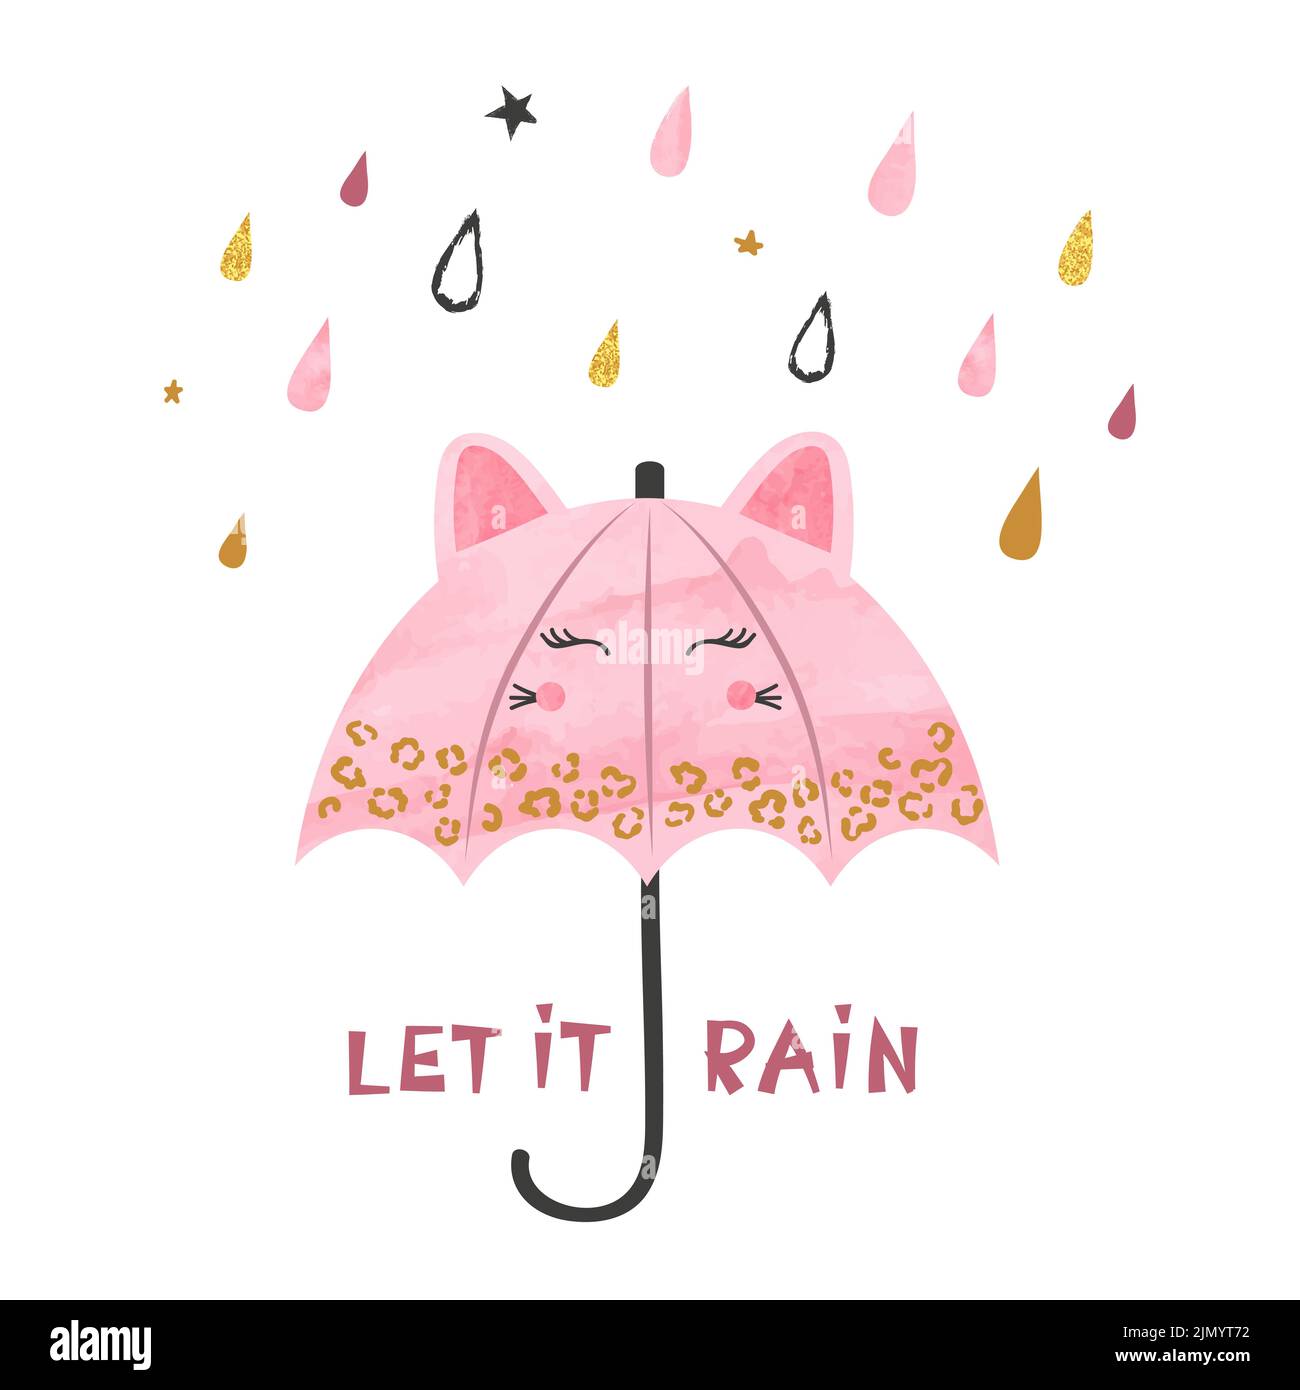 Pink umbrella with rain drops vector illustration. Let it rain lettering. Stock Vector